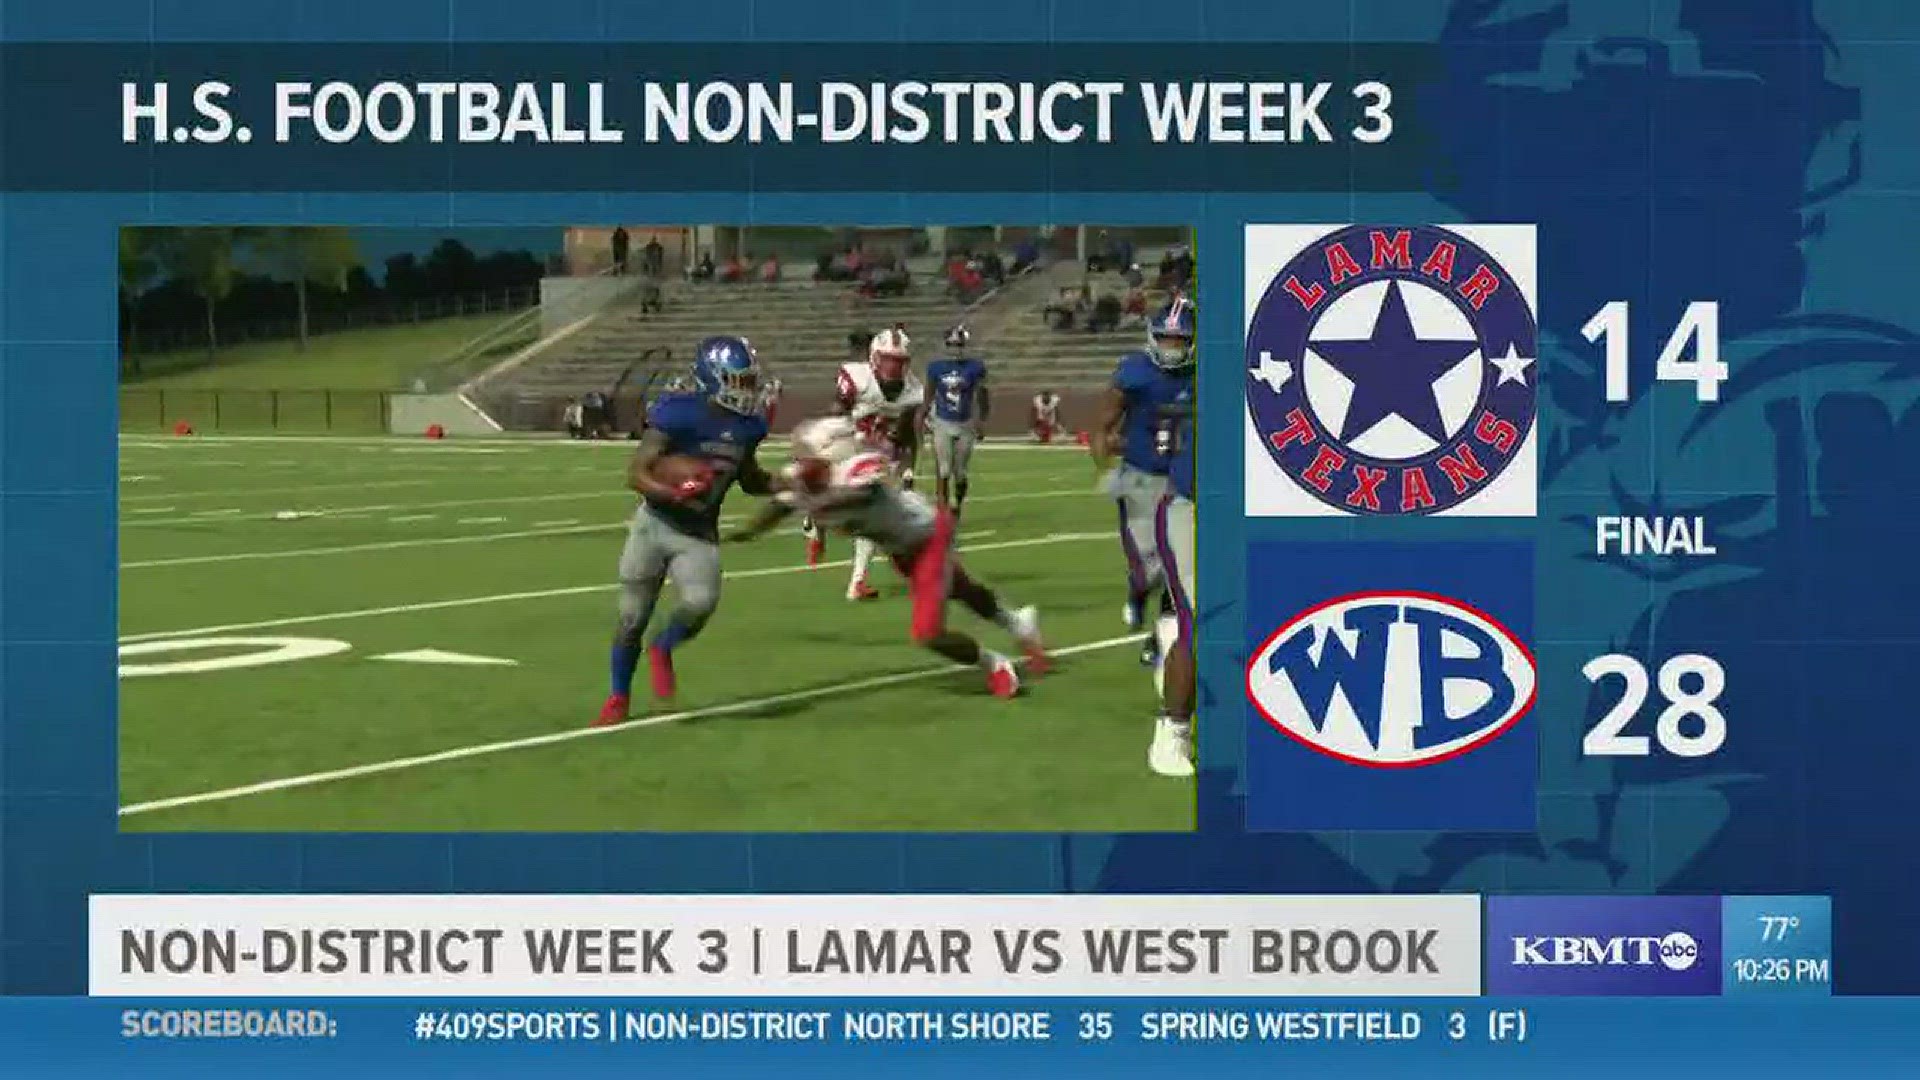 WEEK 3: West Brook wins at homecoming against Lamar 28 - 14